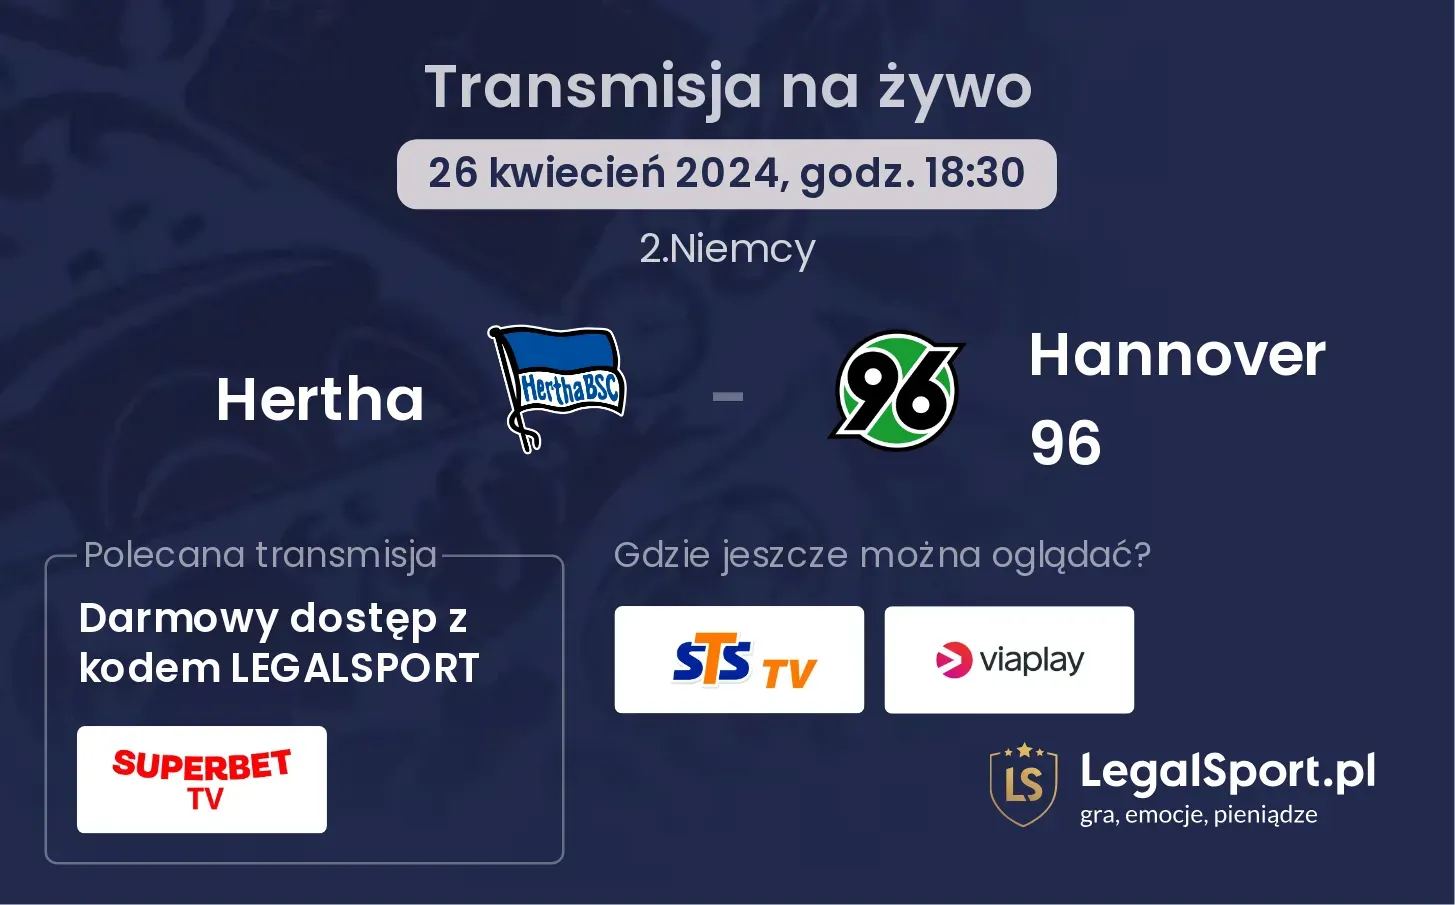 Hertha - Hannover 96 transmisja na żywo